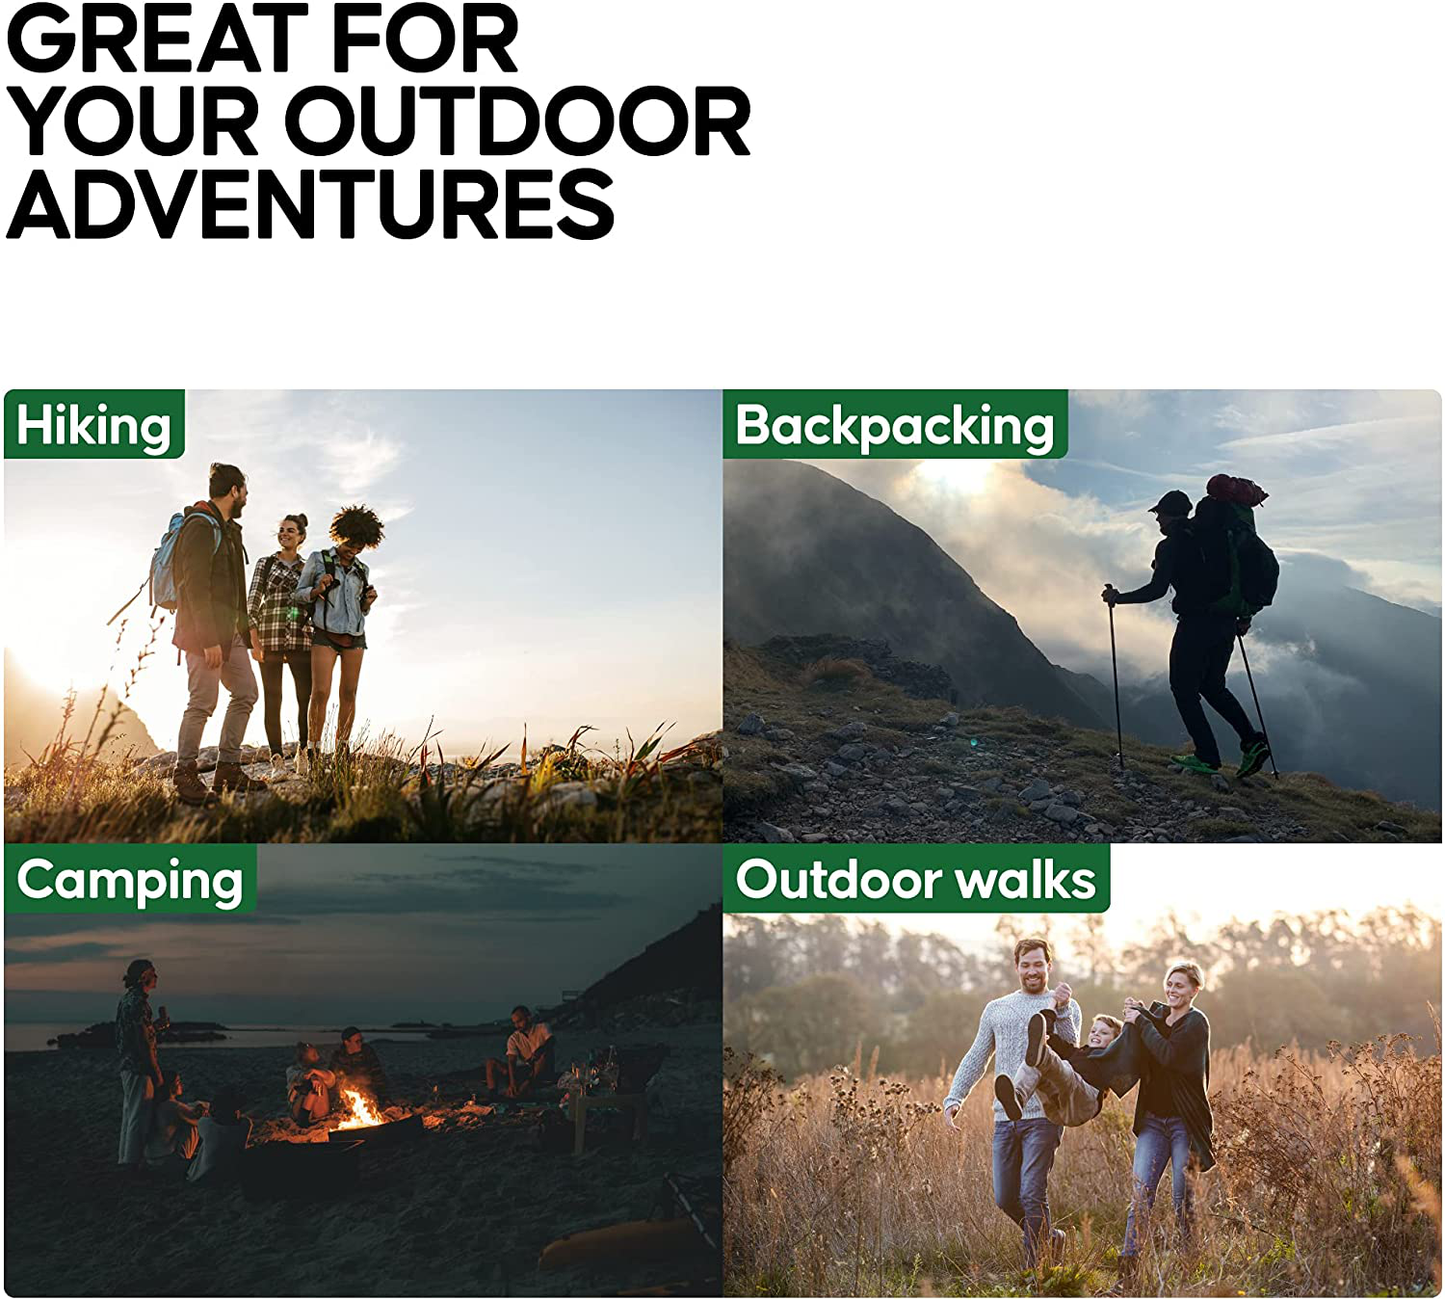 Merino Wool Cushioned Hiking Socks 1-Pack for Men, Women & Kids, Made in EU, Walking, Trekking, Work, Outdoor